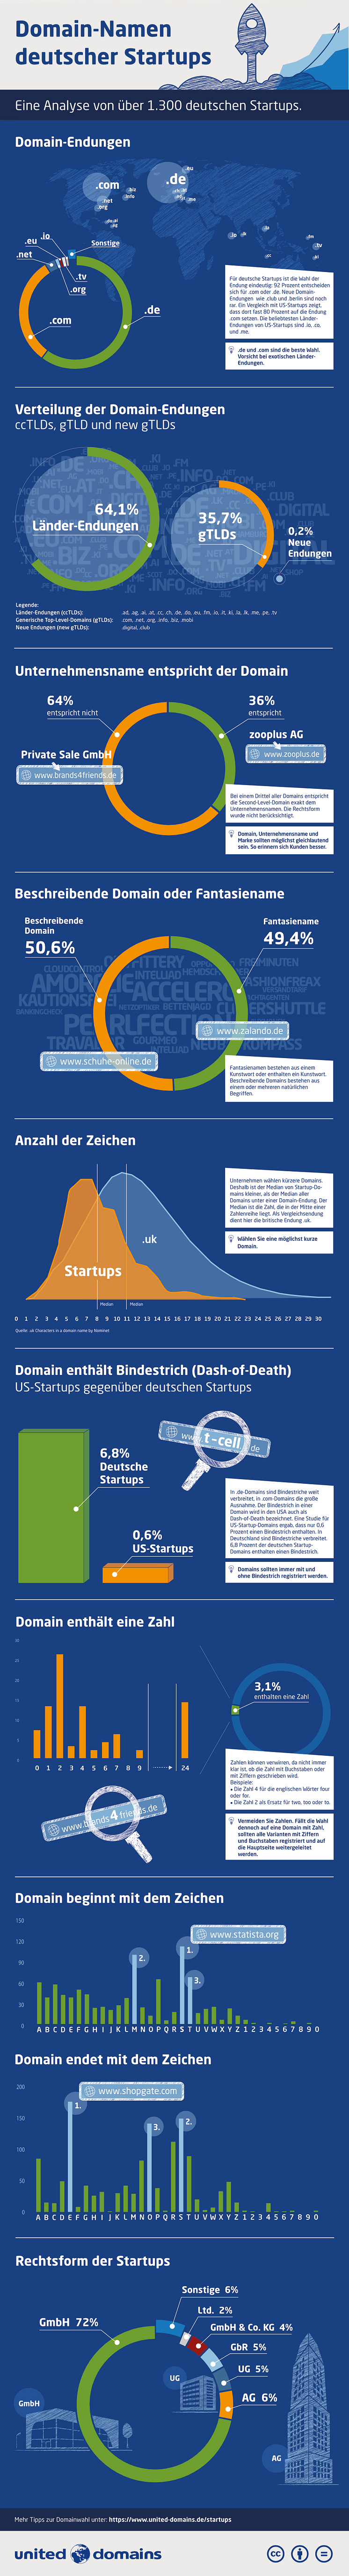 Infografik Startup-Studie